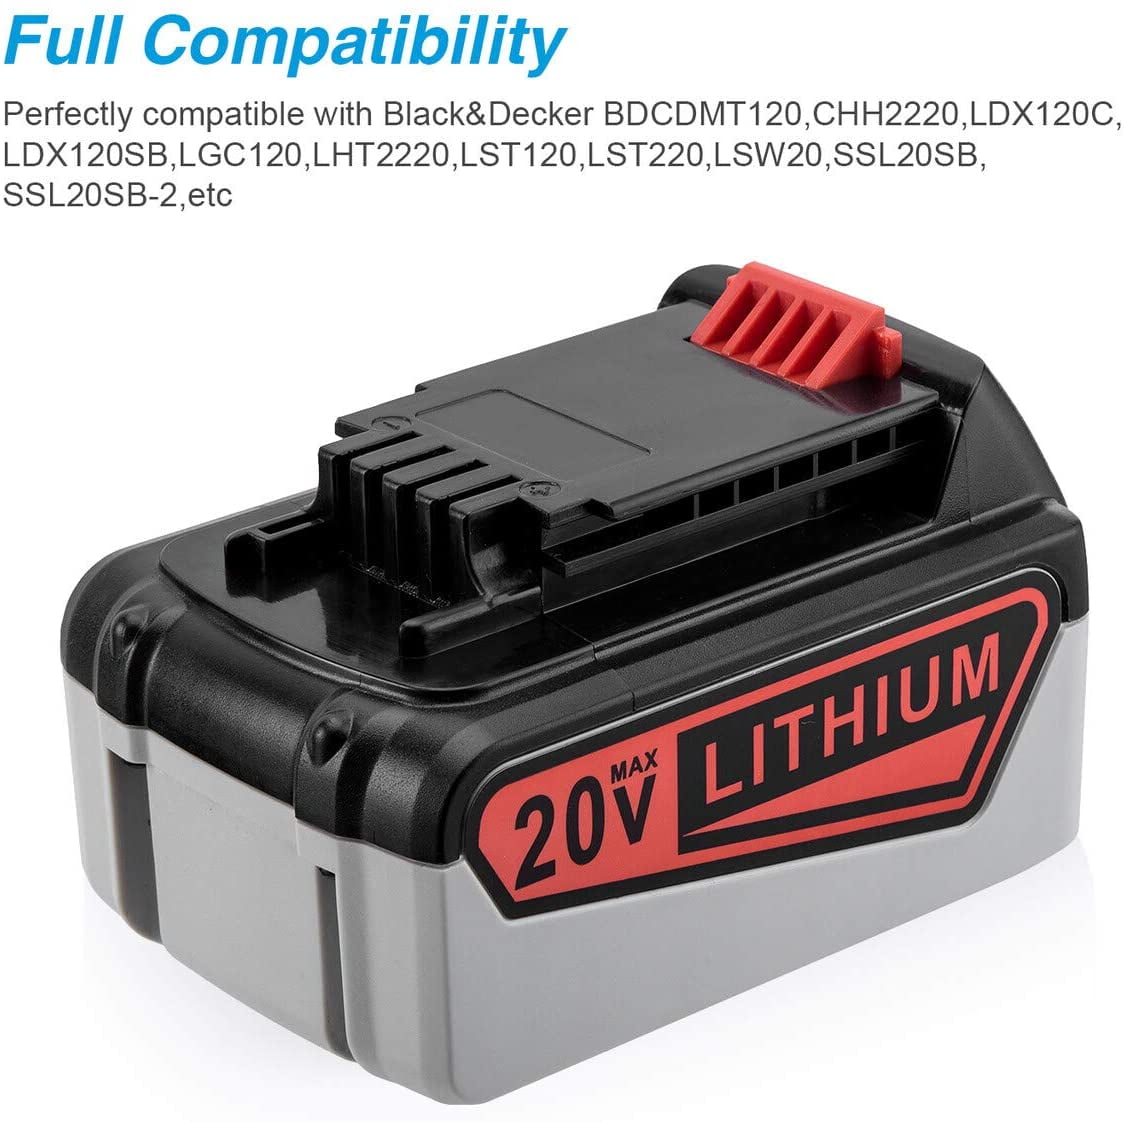 2Pack Lithium LB2X4020 6.0Ah 20V MAX Replacement for Black and Decker 20V Battery LBXR20 LBXR20-OPE LB20 LBX20 LBX4020 LB2X4020-OPE 